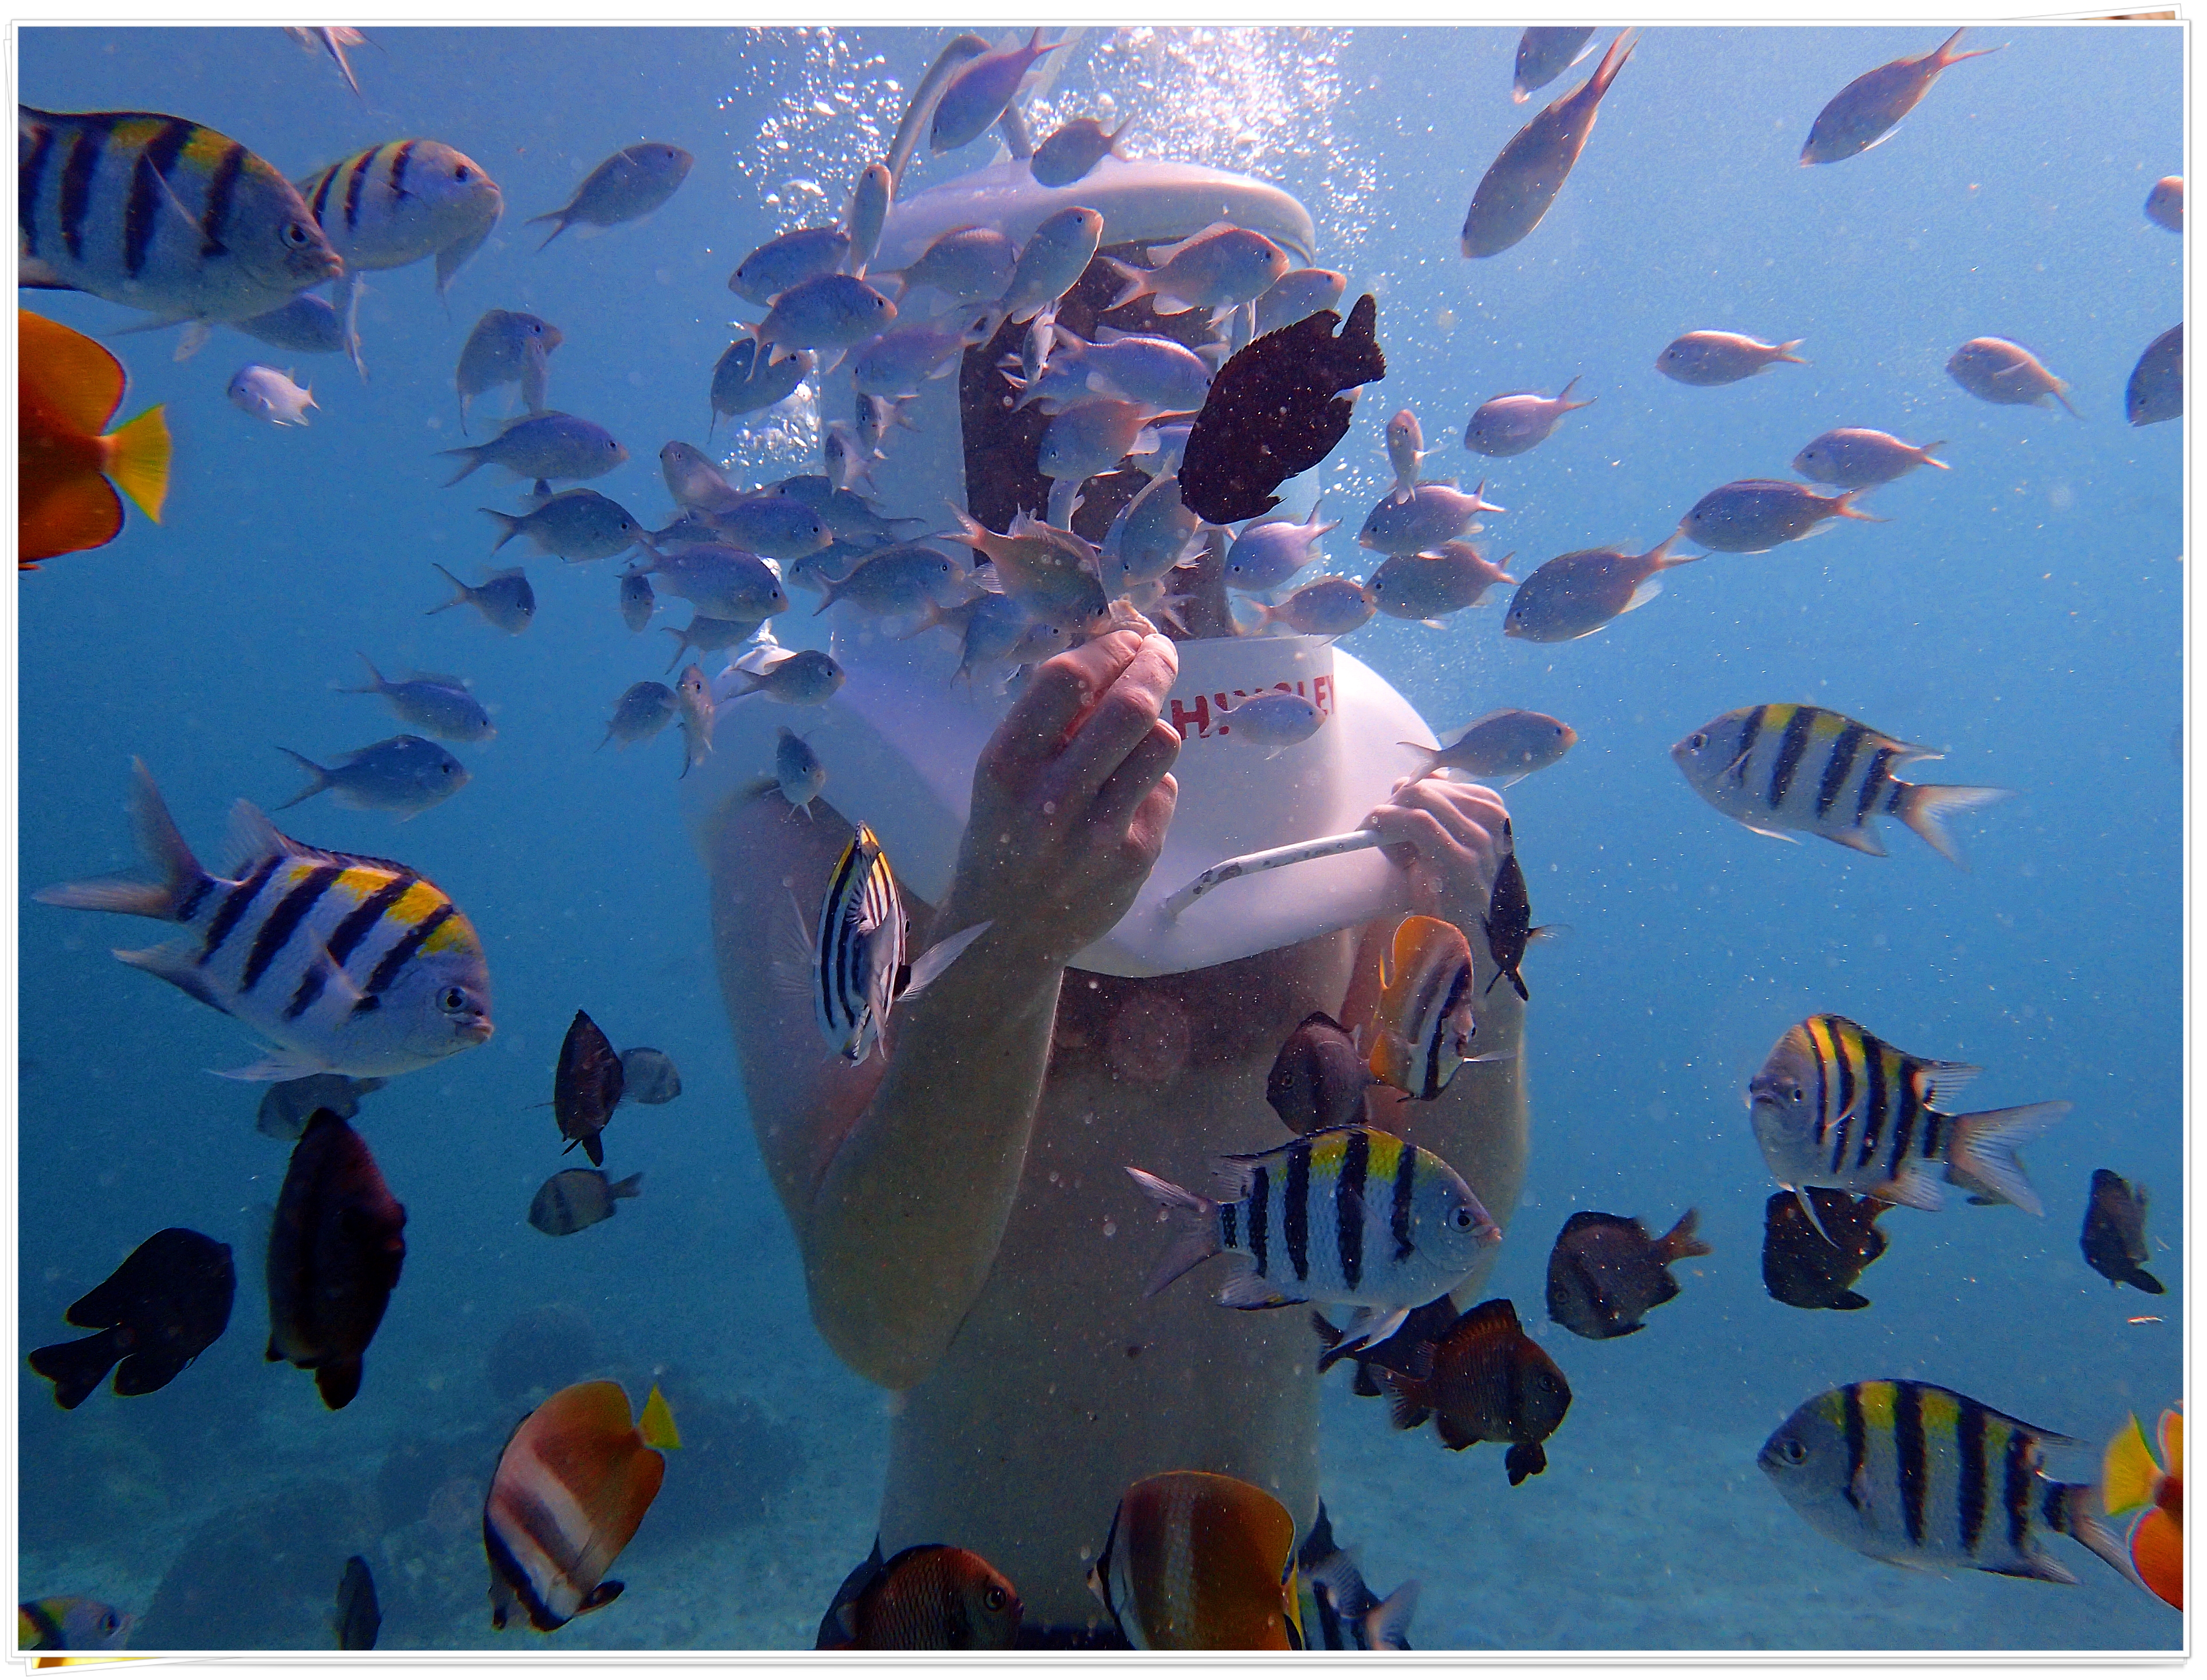 2015 Boracay Aklan Philippines (Helmet Diving and Fish Feeding)